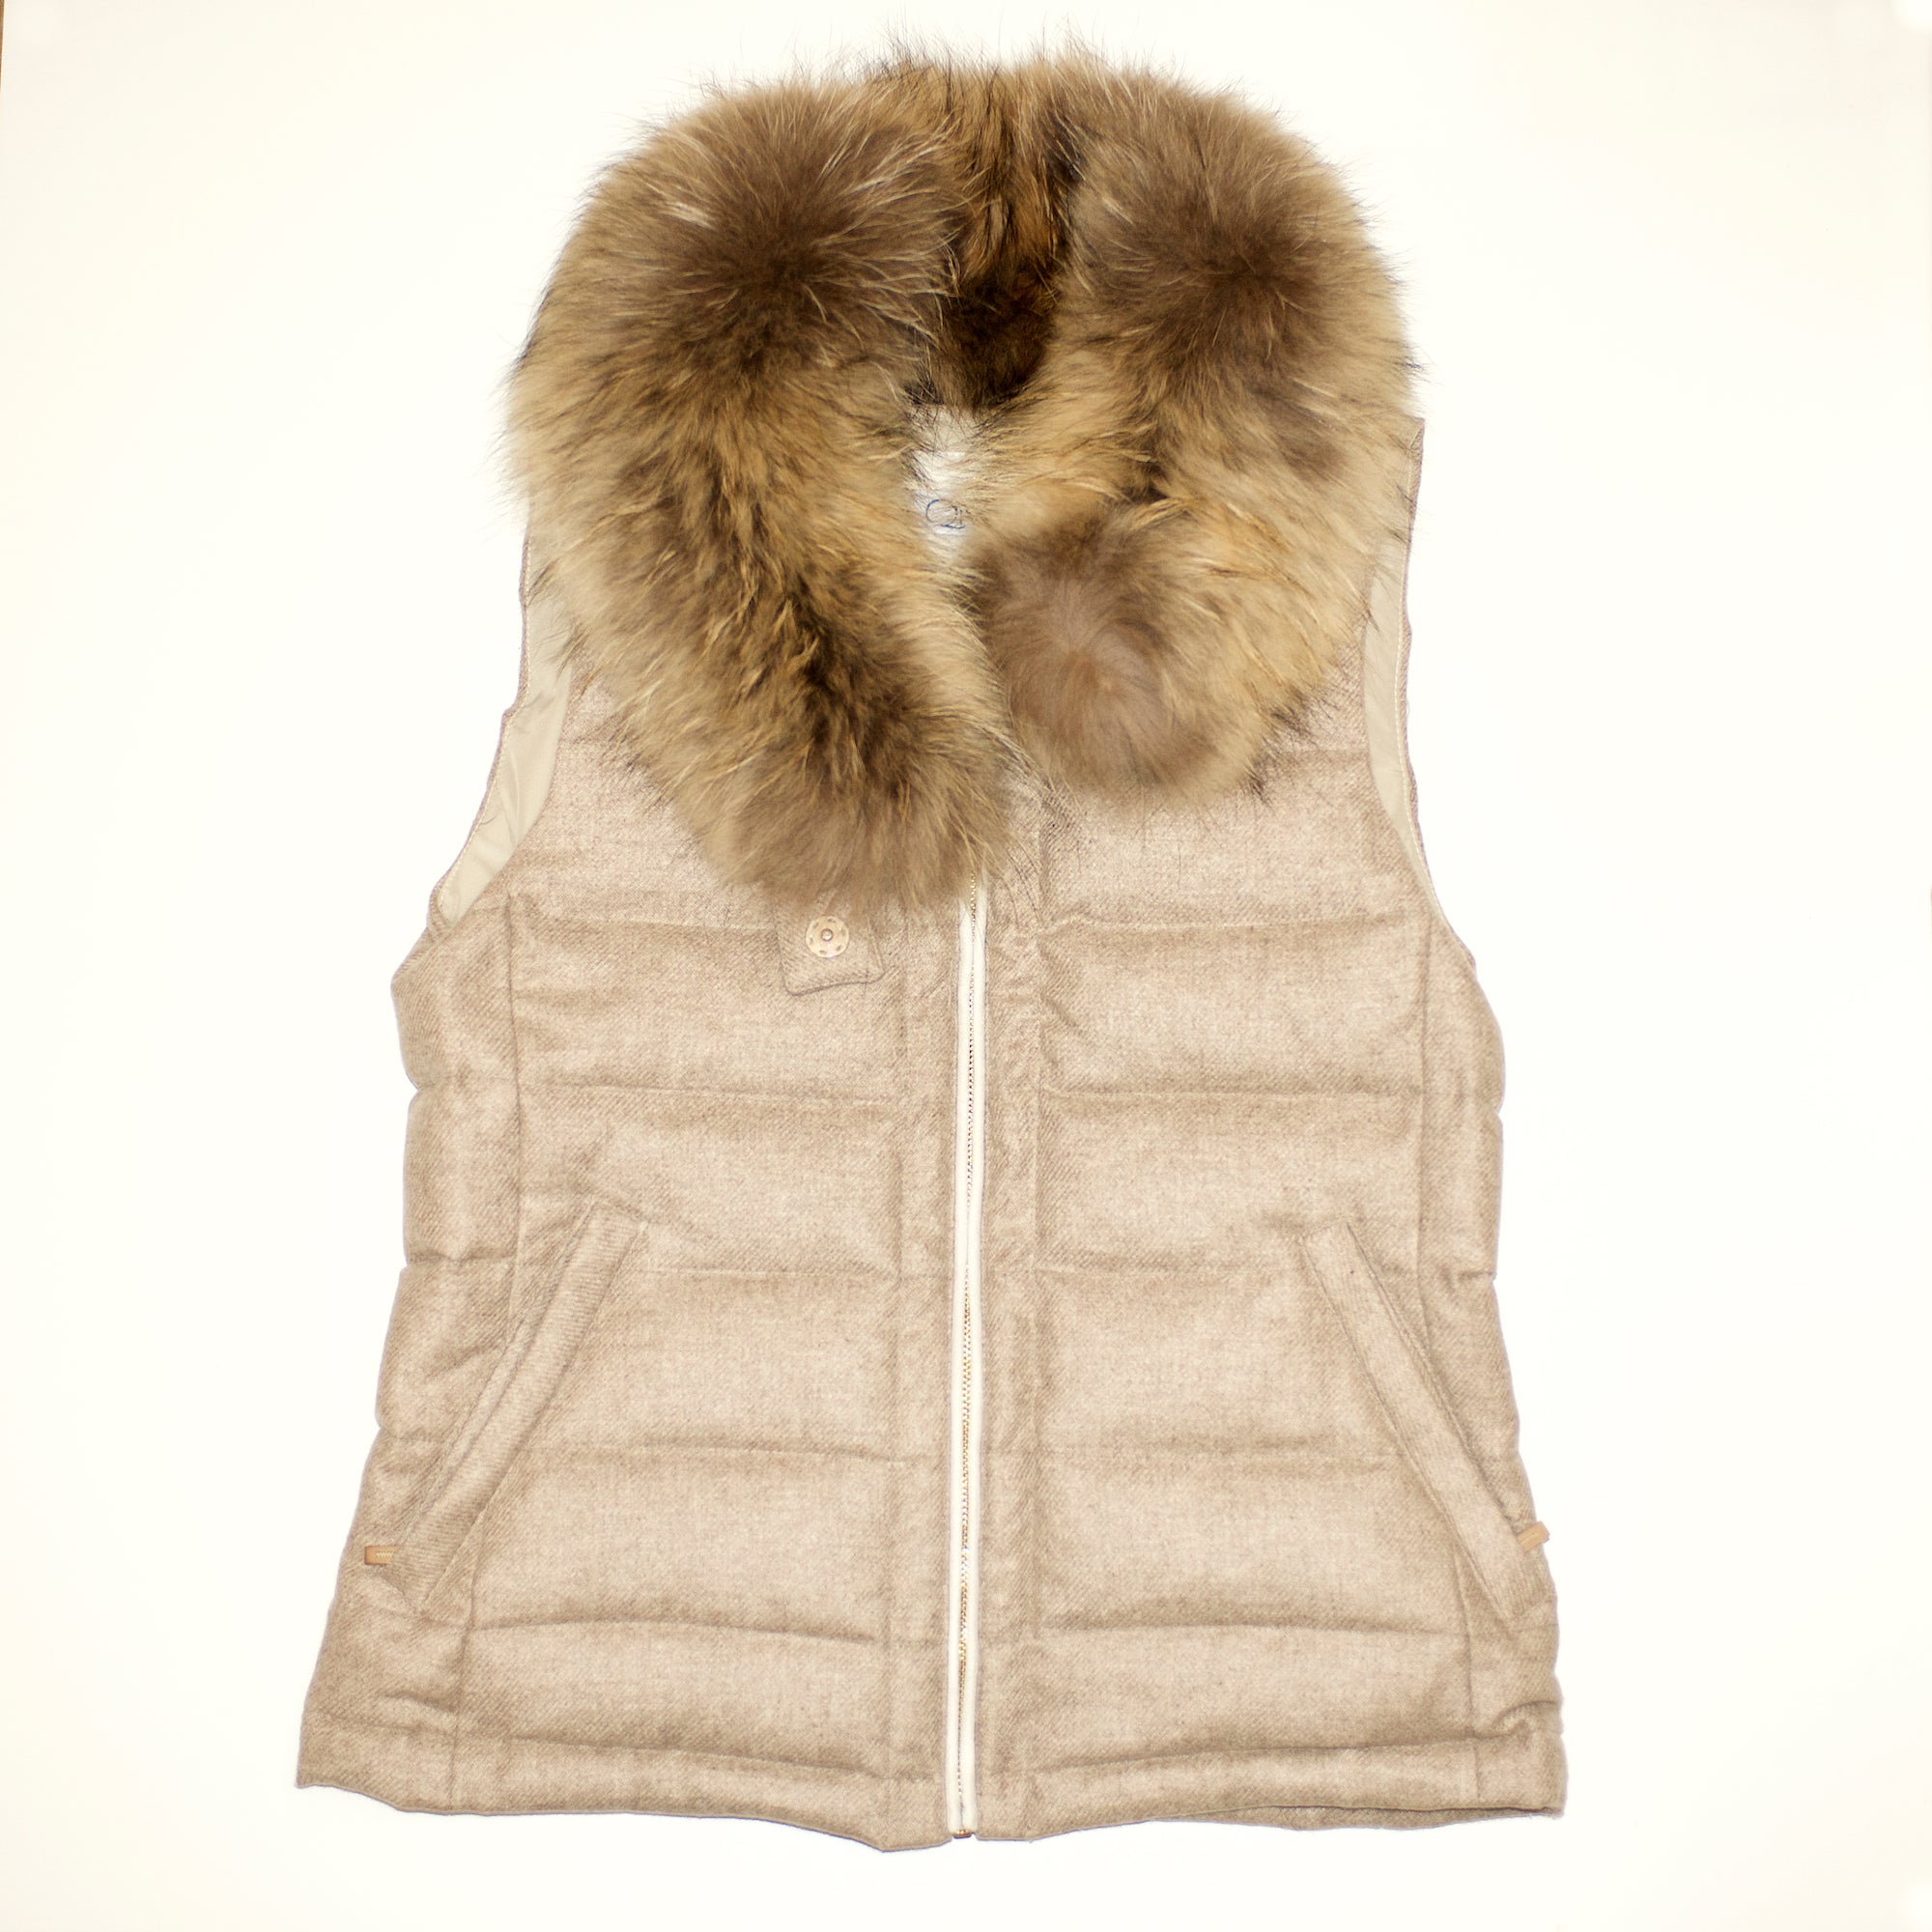 Muskox / Cashmere Vest with Fox Fur Collar